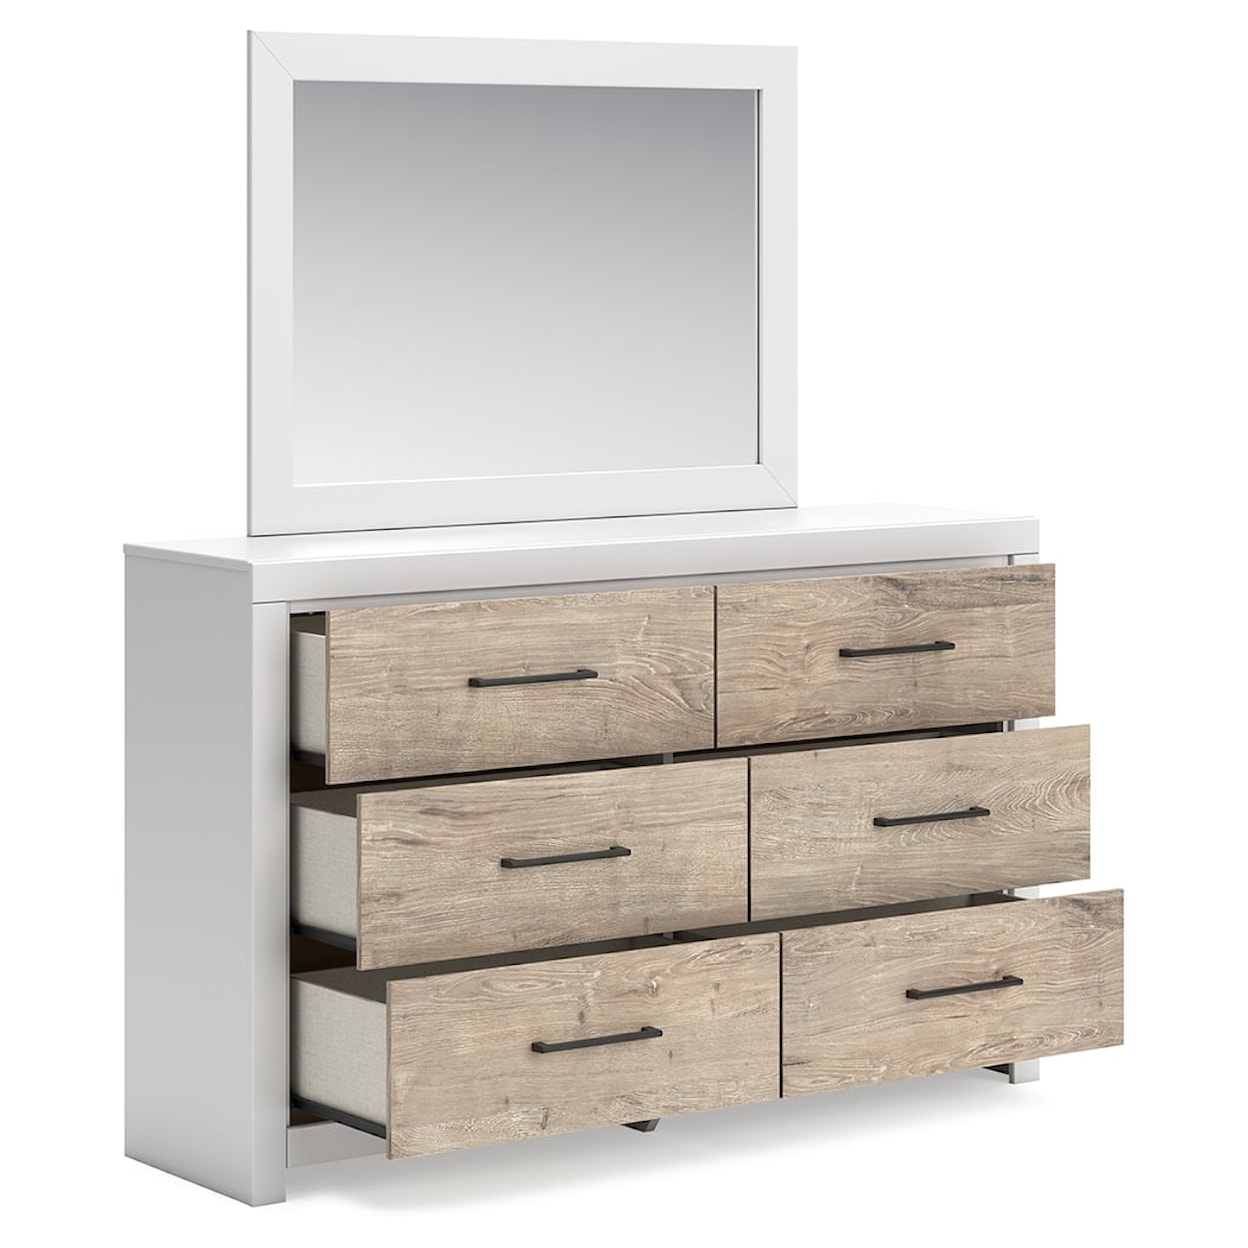 Ashley Furniture Signature Design Charbitt Dresser and Mirror